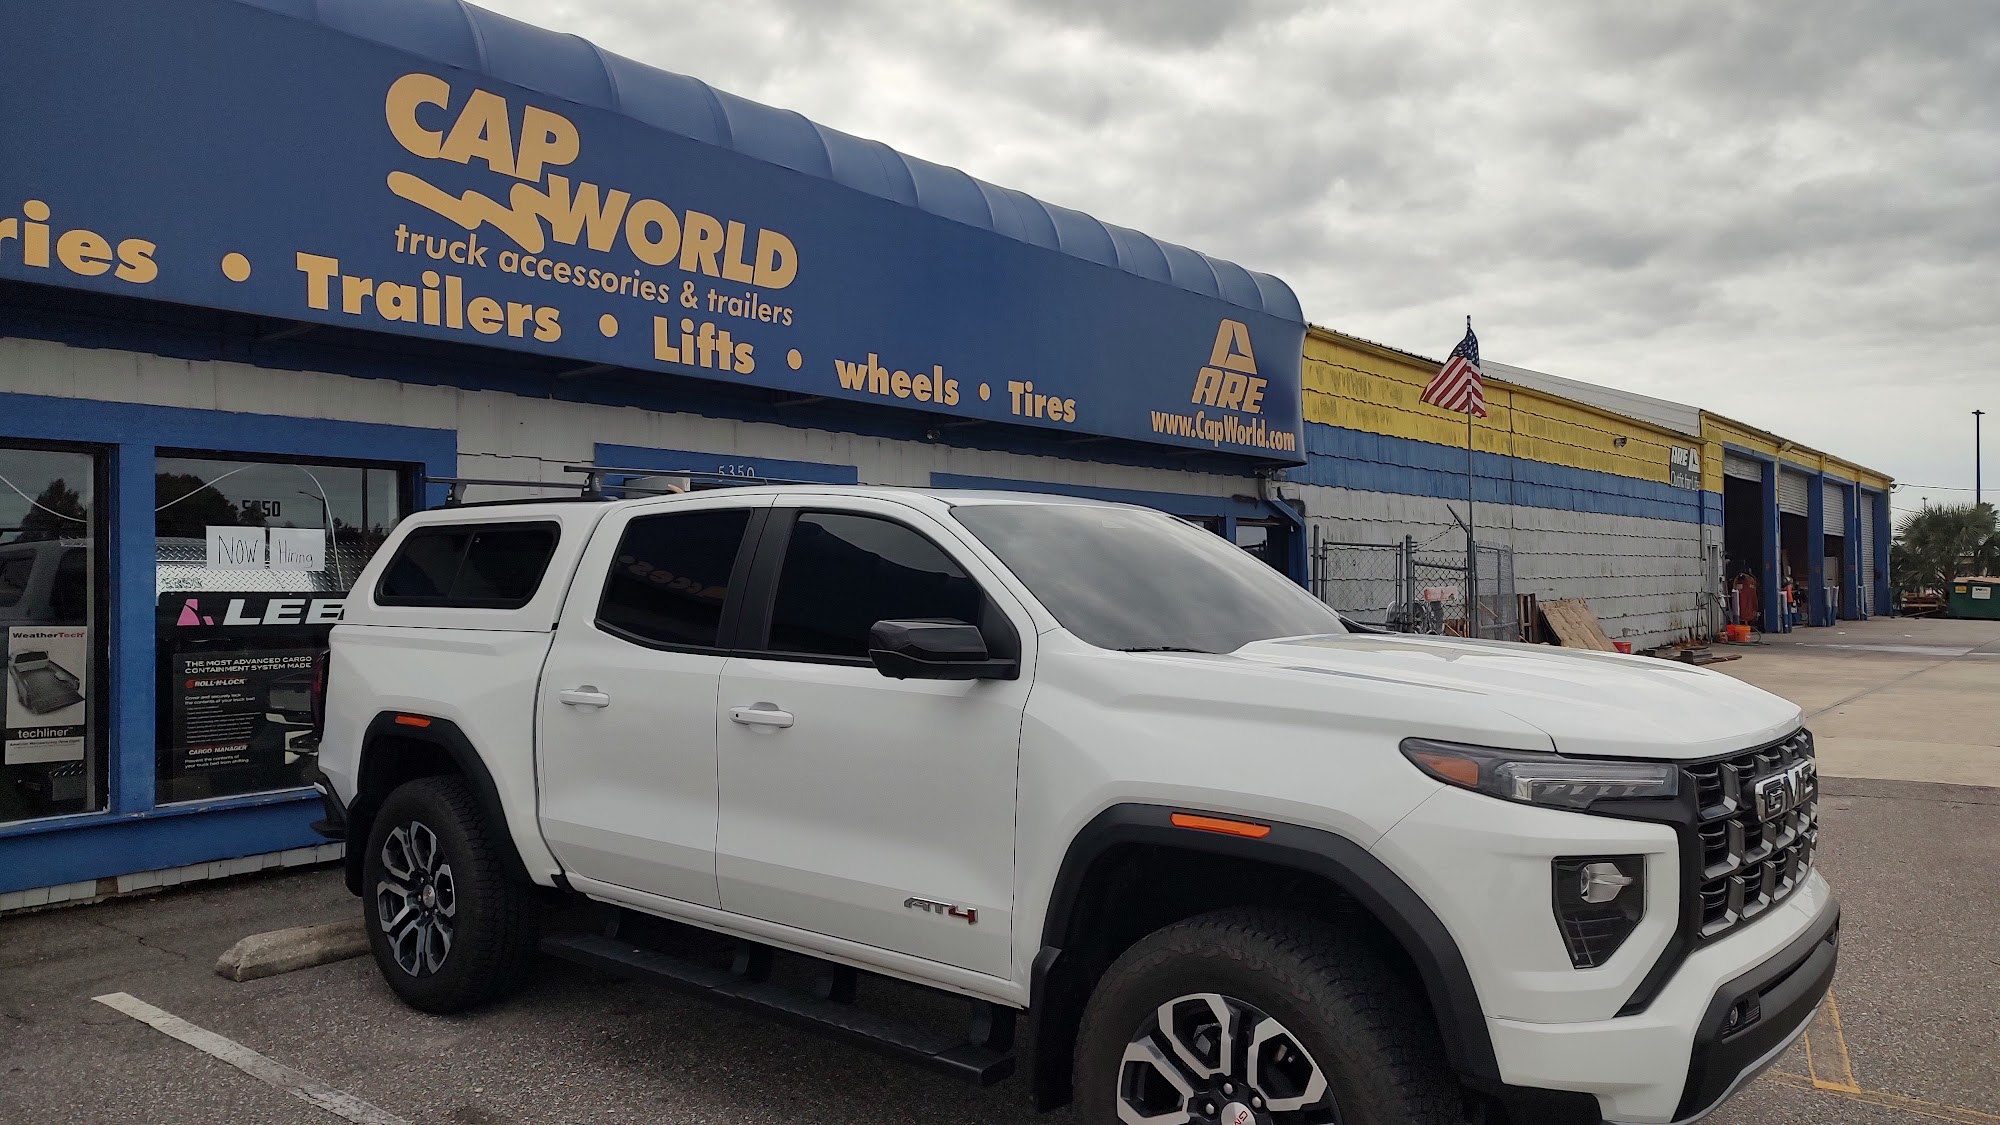 Westborough Cap World Truck Accessories & Trailers